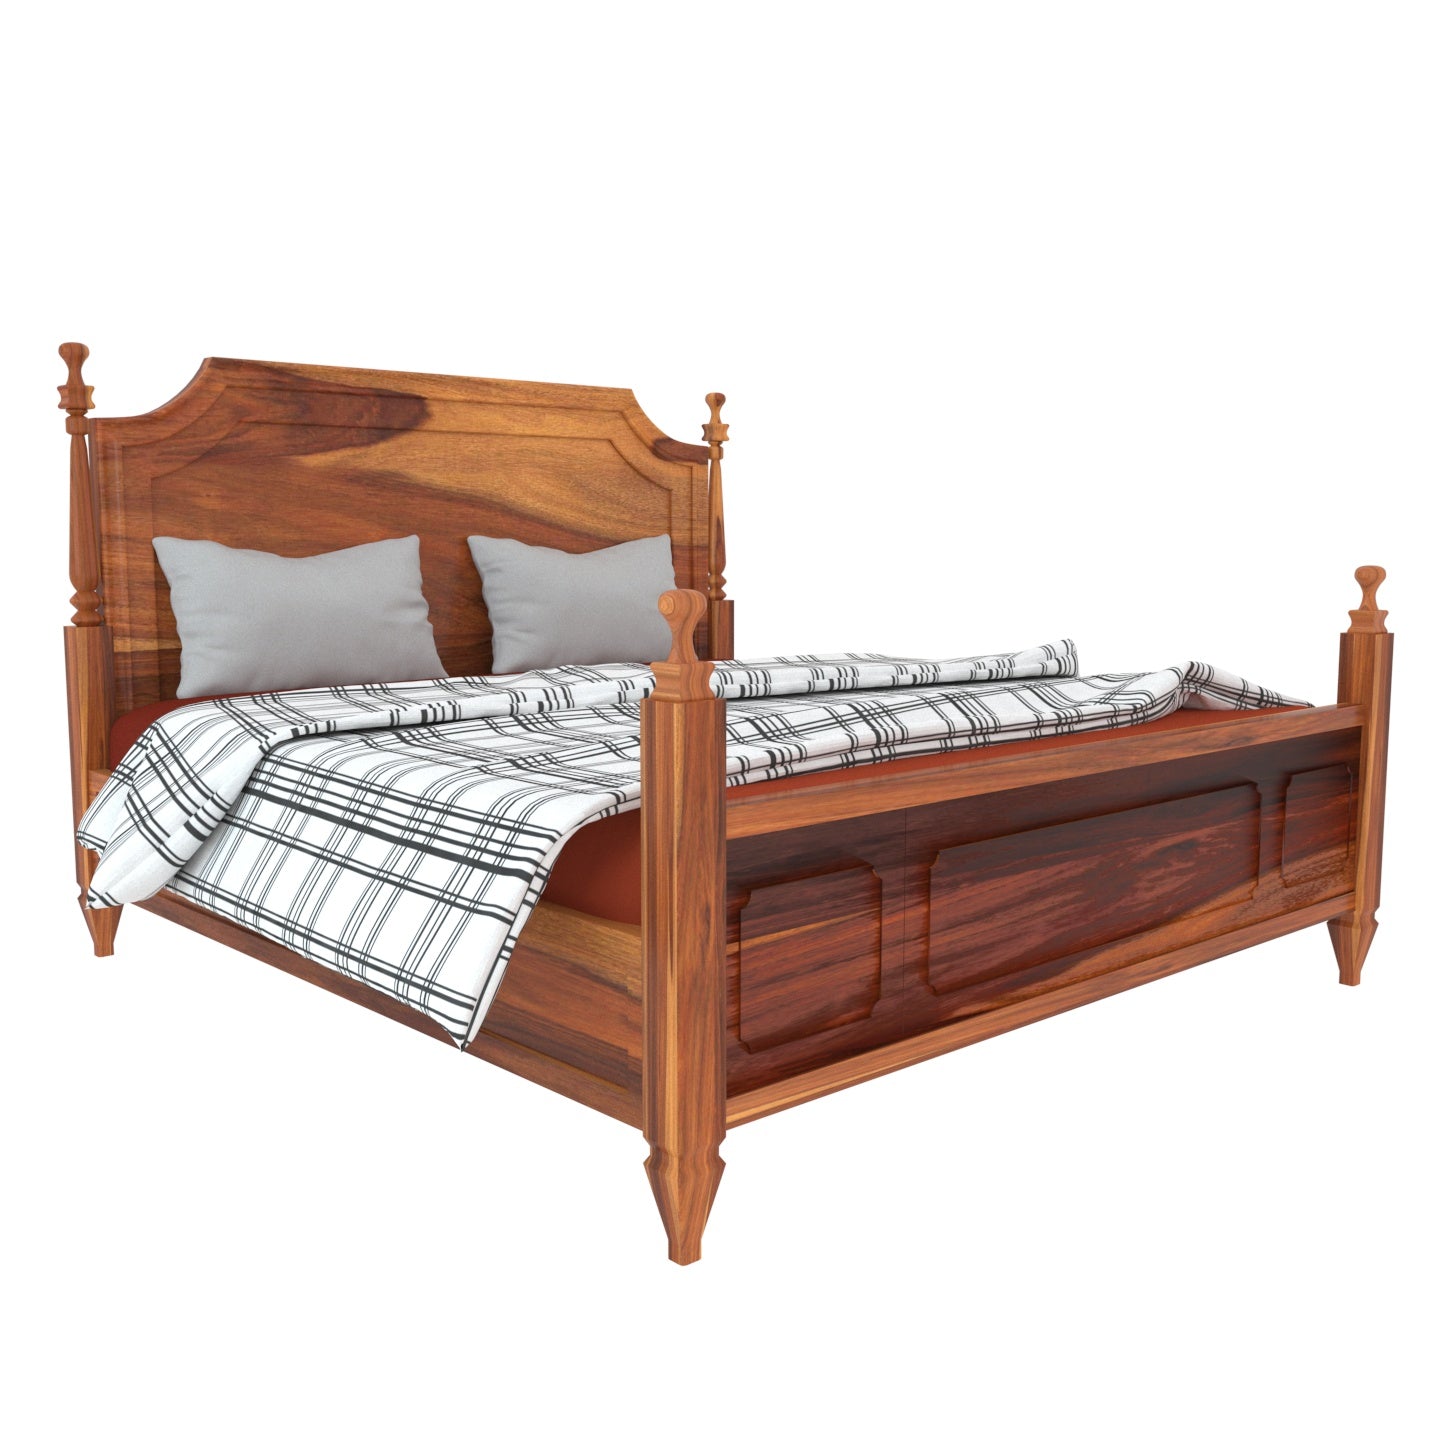 Aesthetic Crock Natural Finish Handmade Wooden Bed for Home Bedroom Furniture Sets